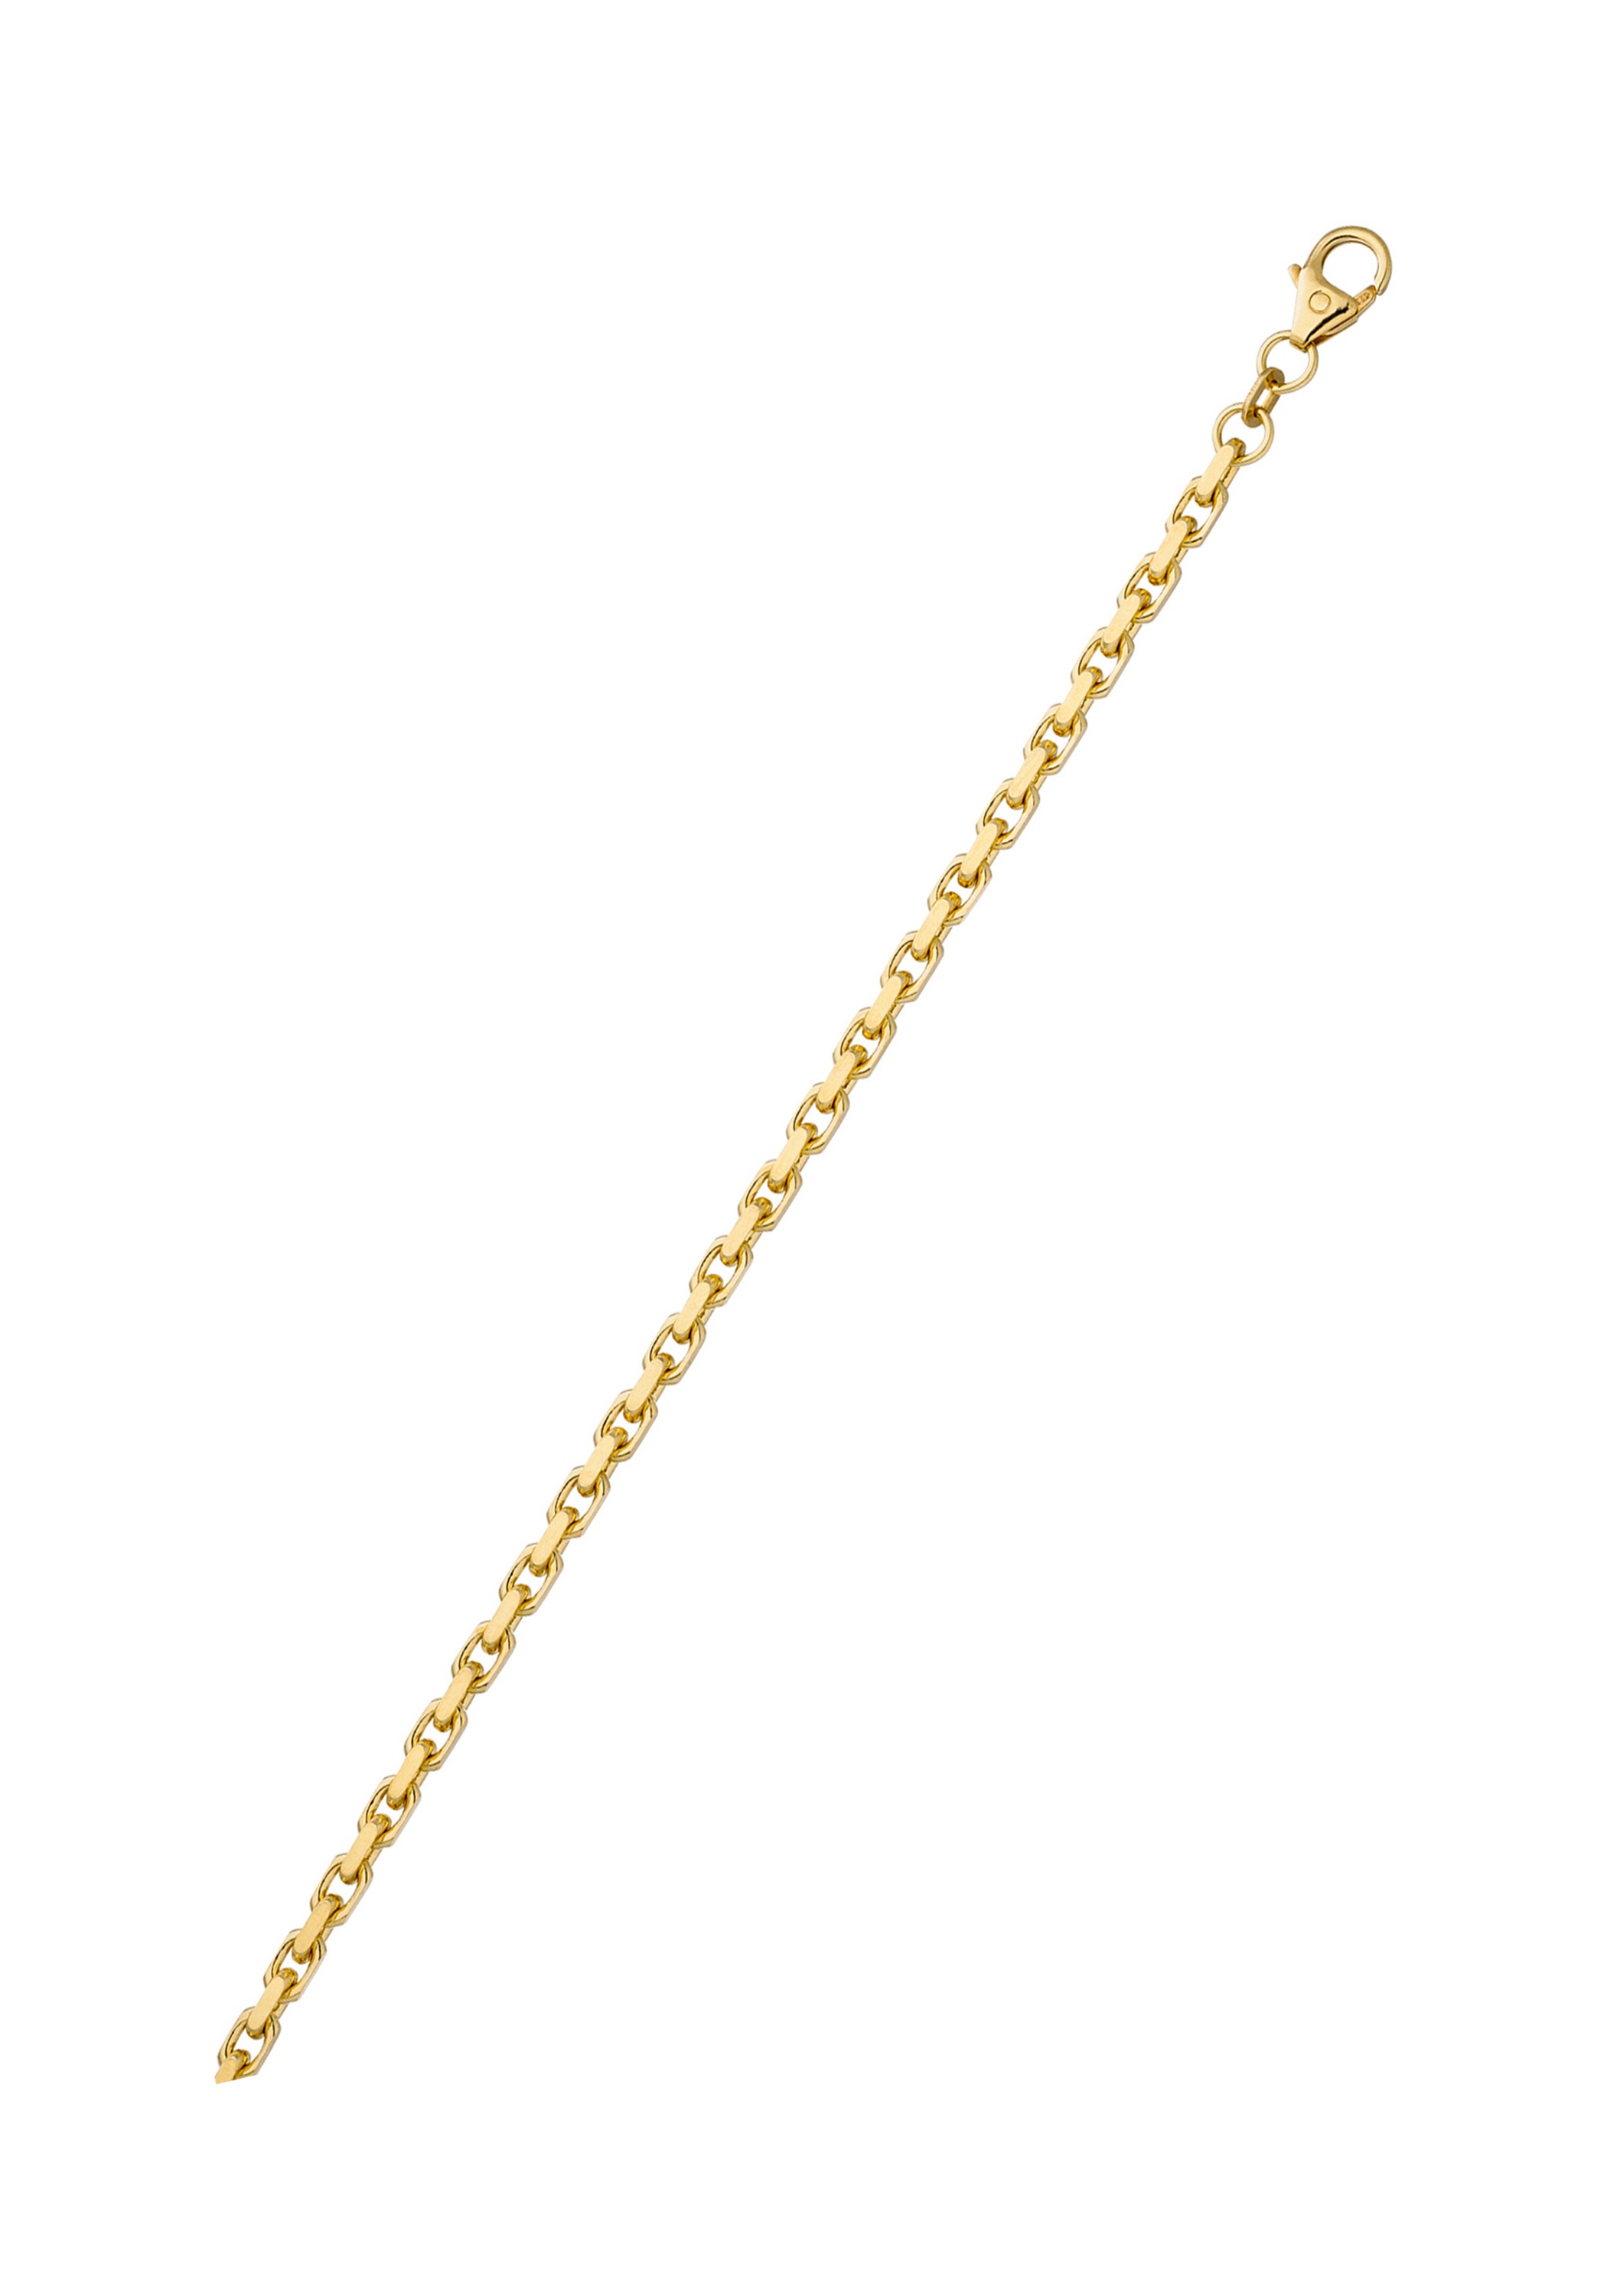 JOBO Goldarmband »Anker-Armband« Ankerarmband 333 Gold diamantiert 21 cm